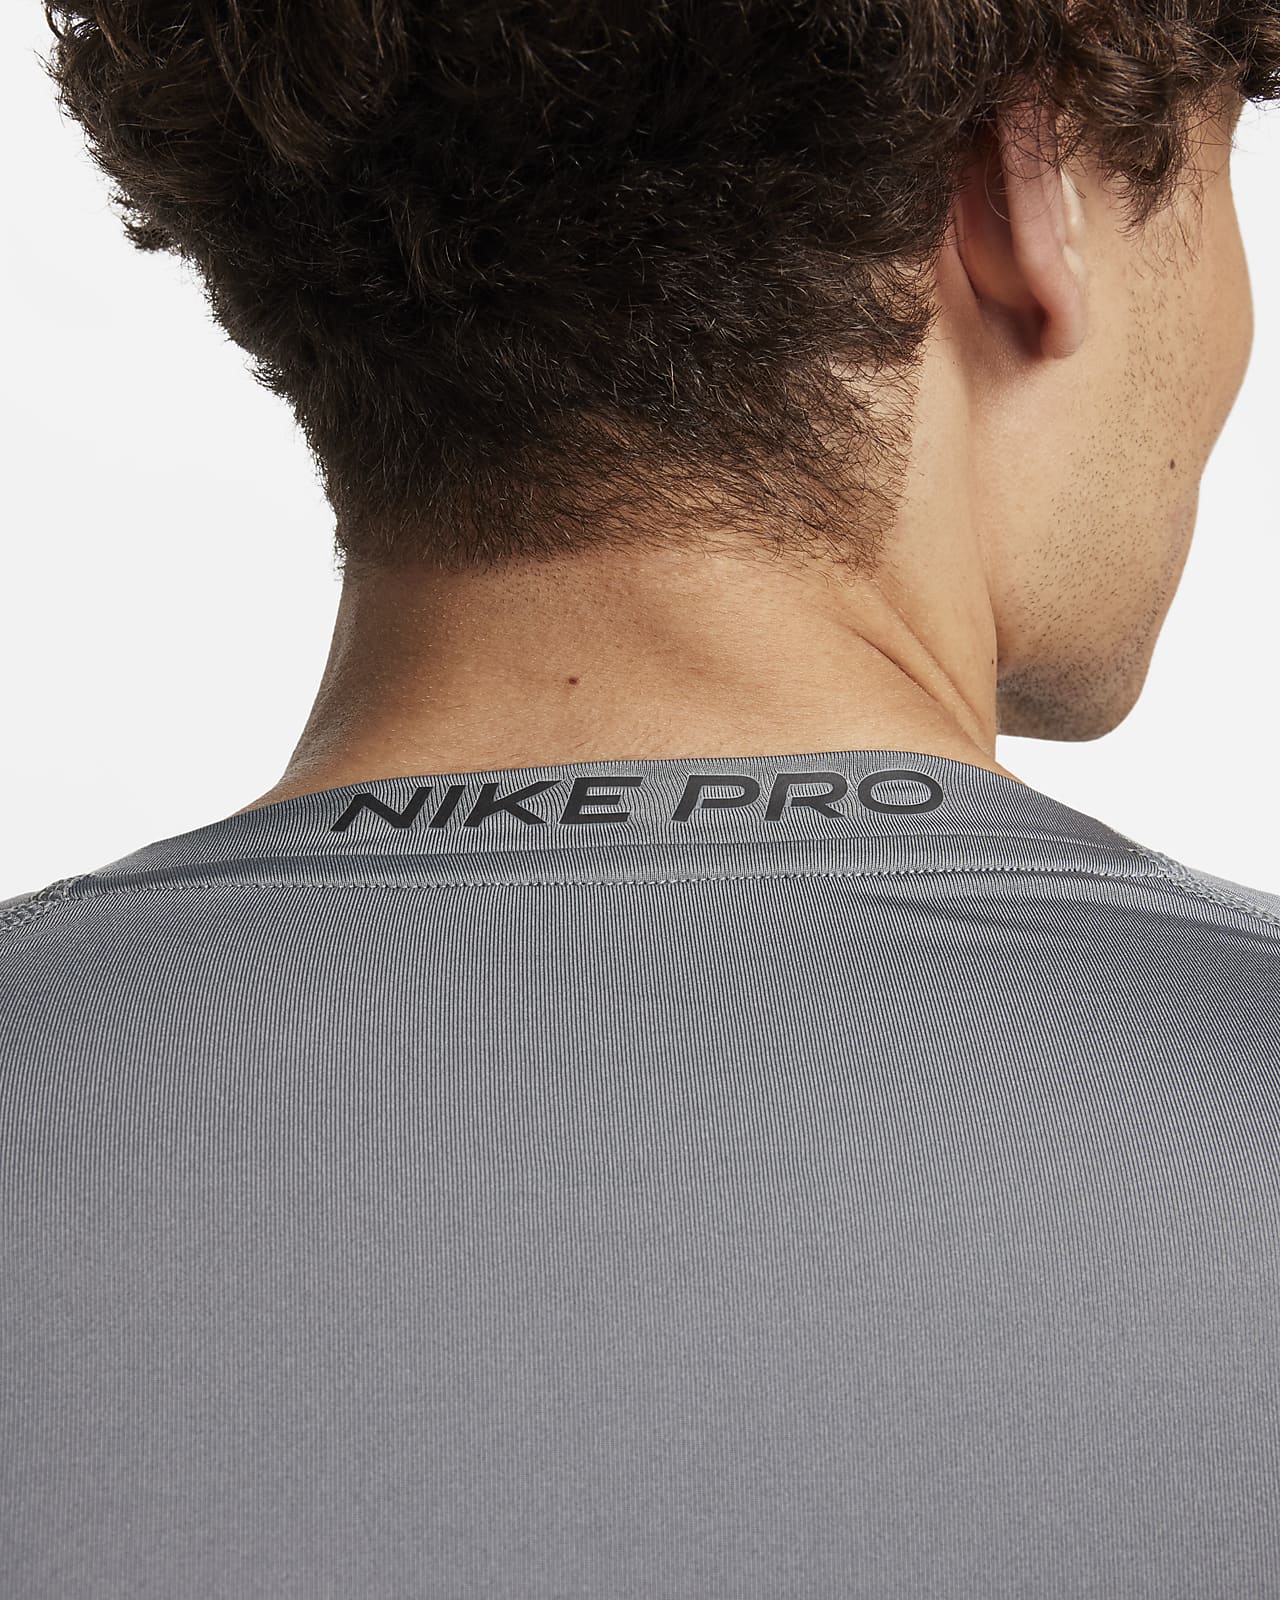 Nike Pro男款緊身褲FB7953-010(NS113010216)